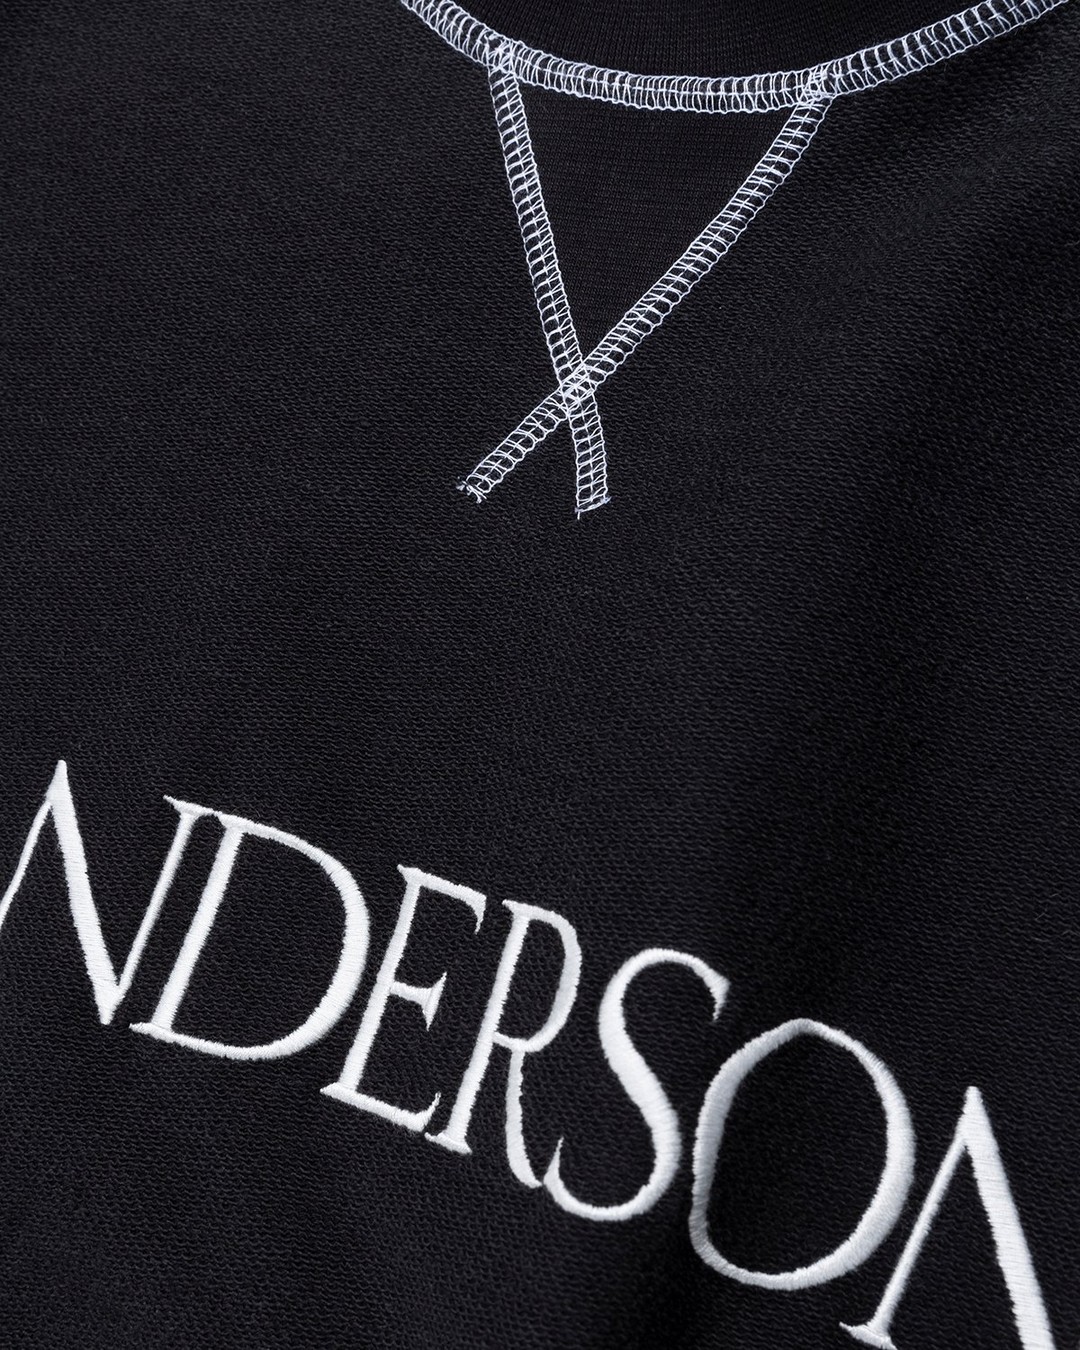 J.W. Anderson – Inside Out Contrast Sweatshirt Black - Sweatshirts - Black - Image 4